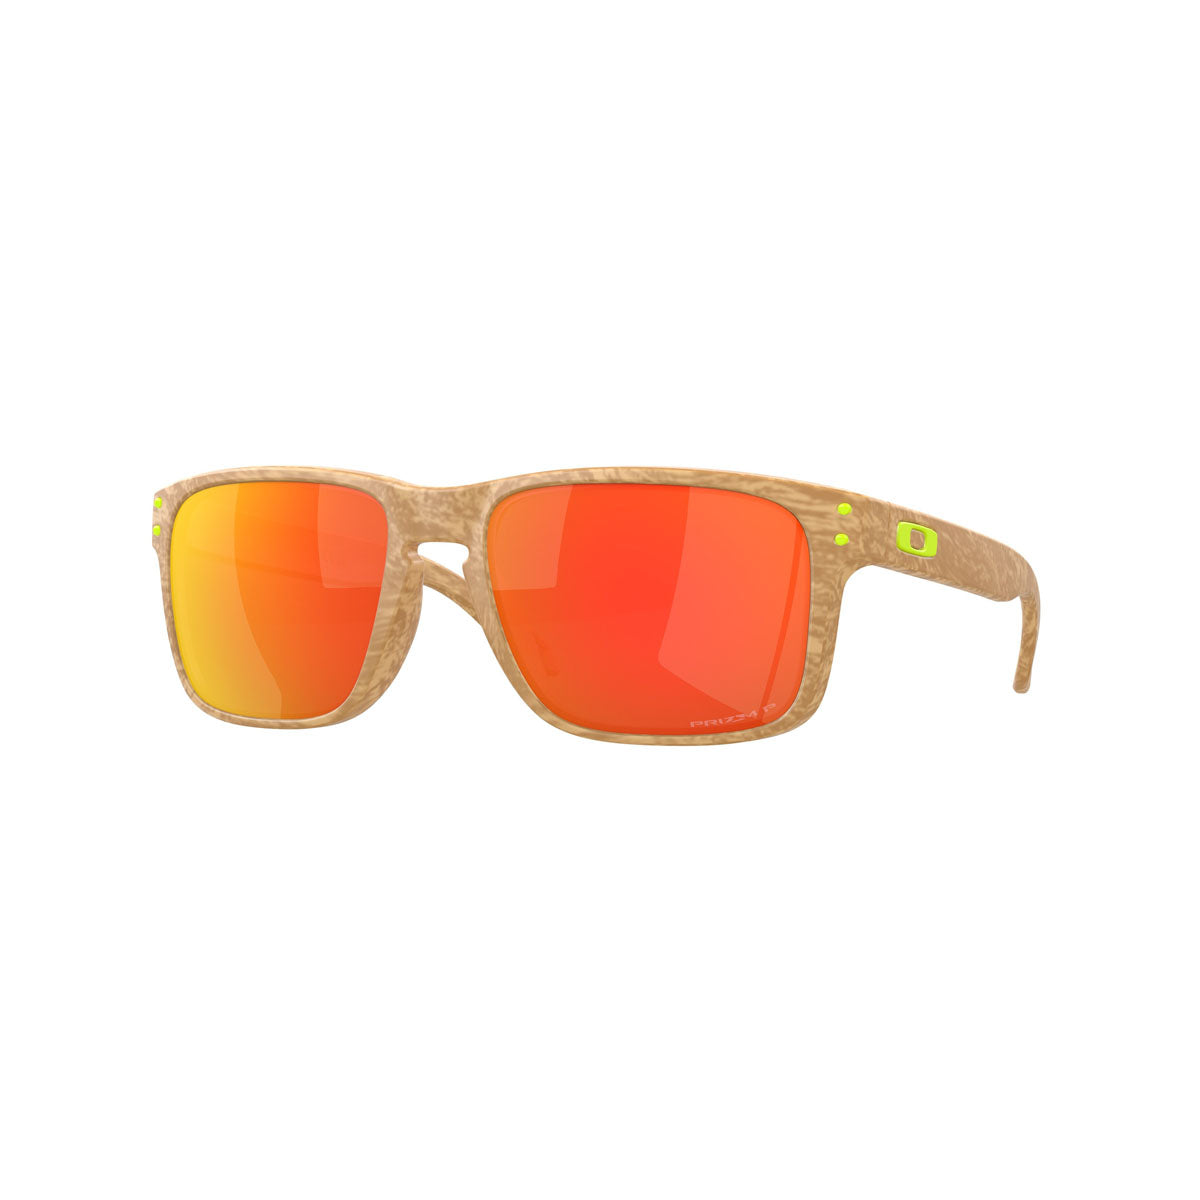 Oakley Holbrook Polarized Sunglasses - Matte Stone Desert Tan/Prizm Ruby Polarized